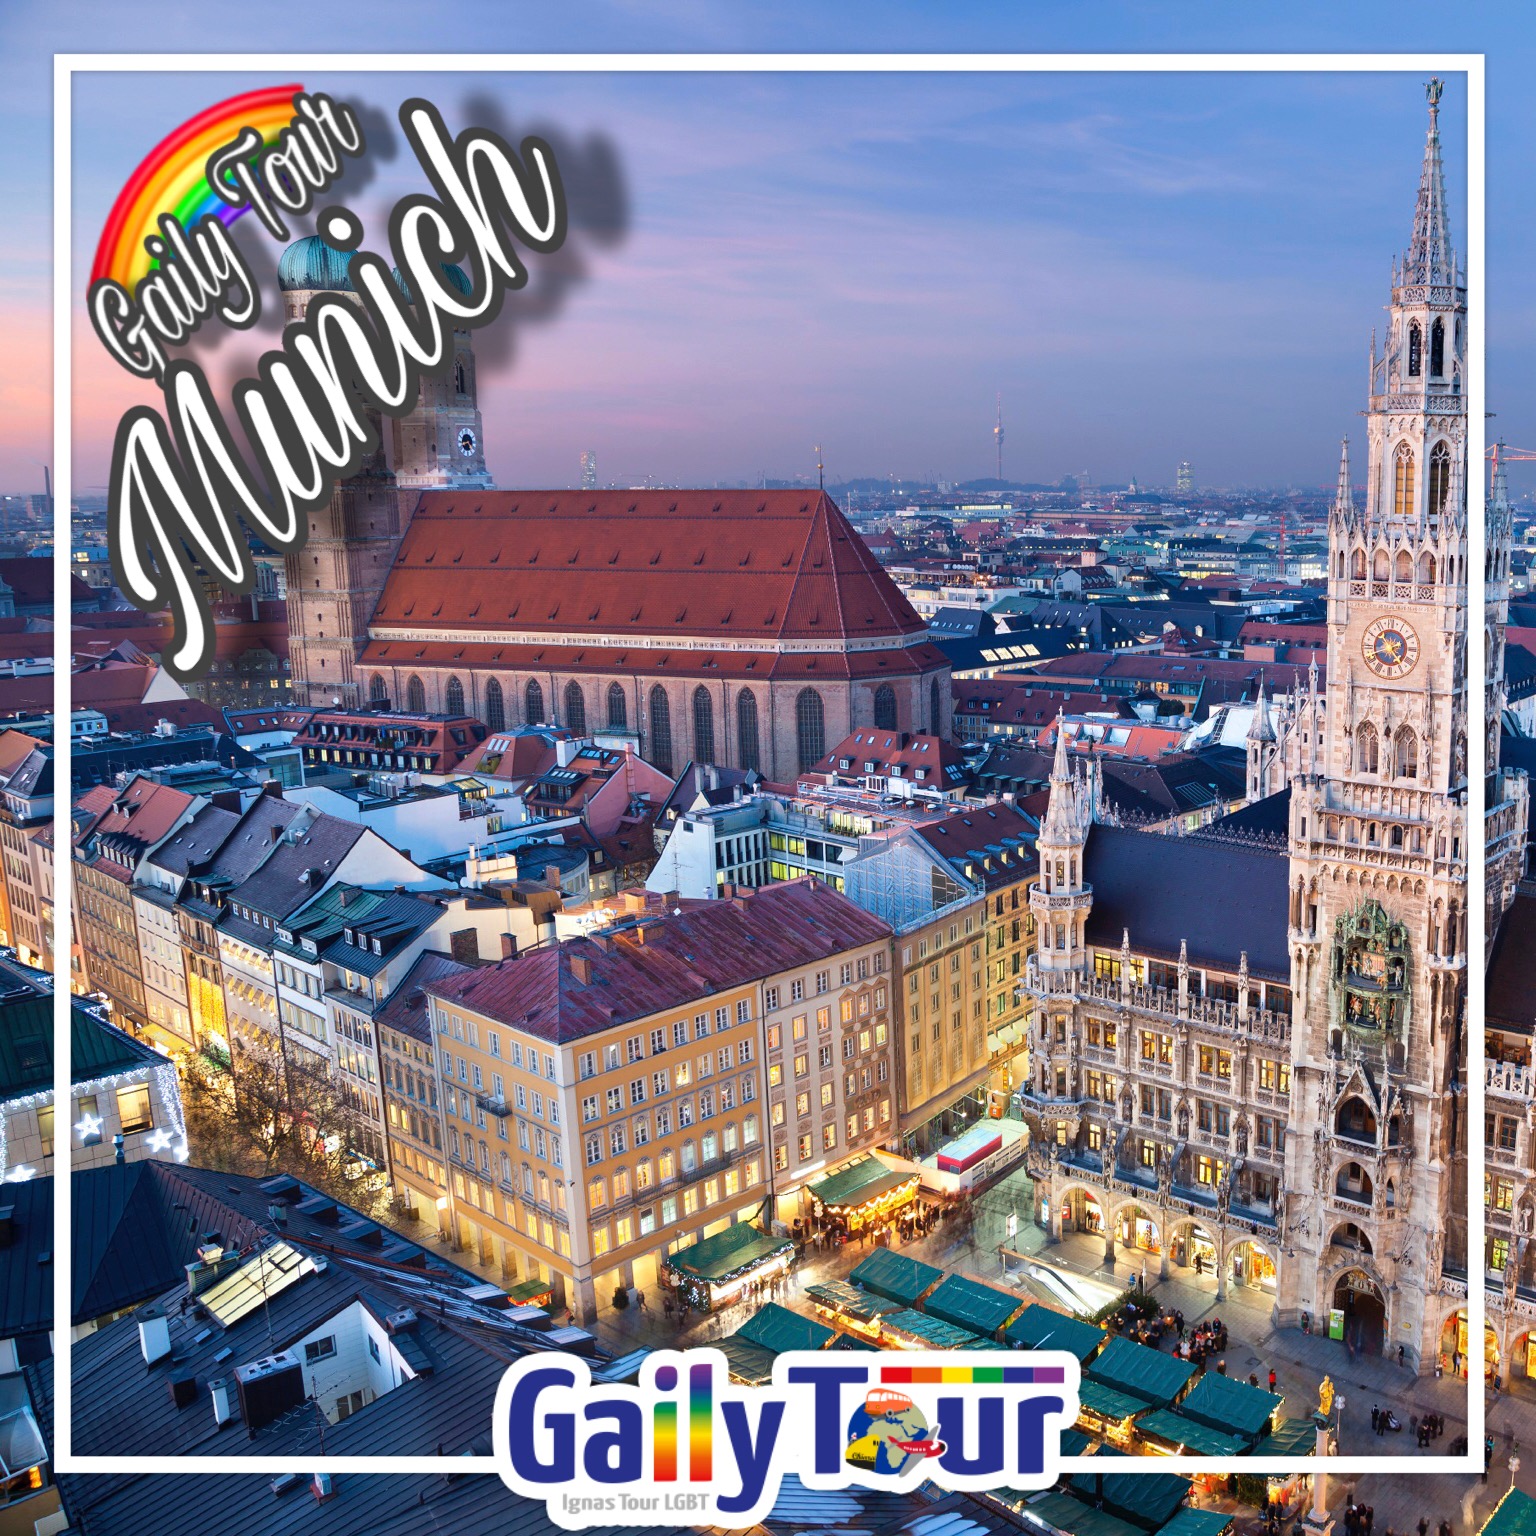 Gay Munich (and lesbian Munich) - info and events